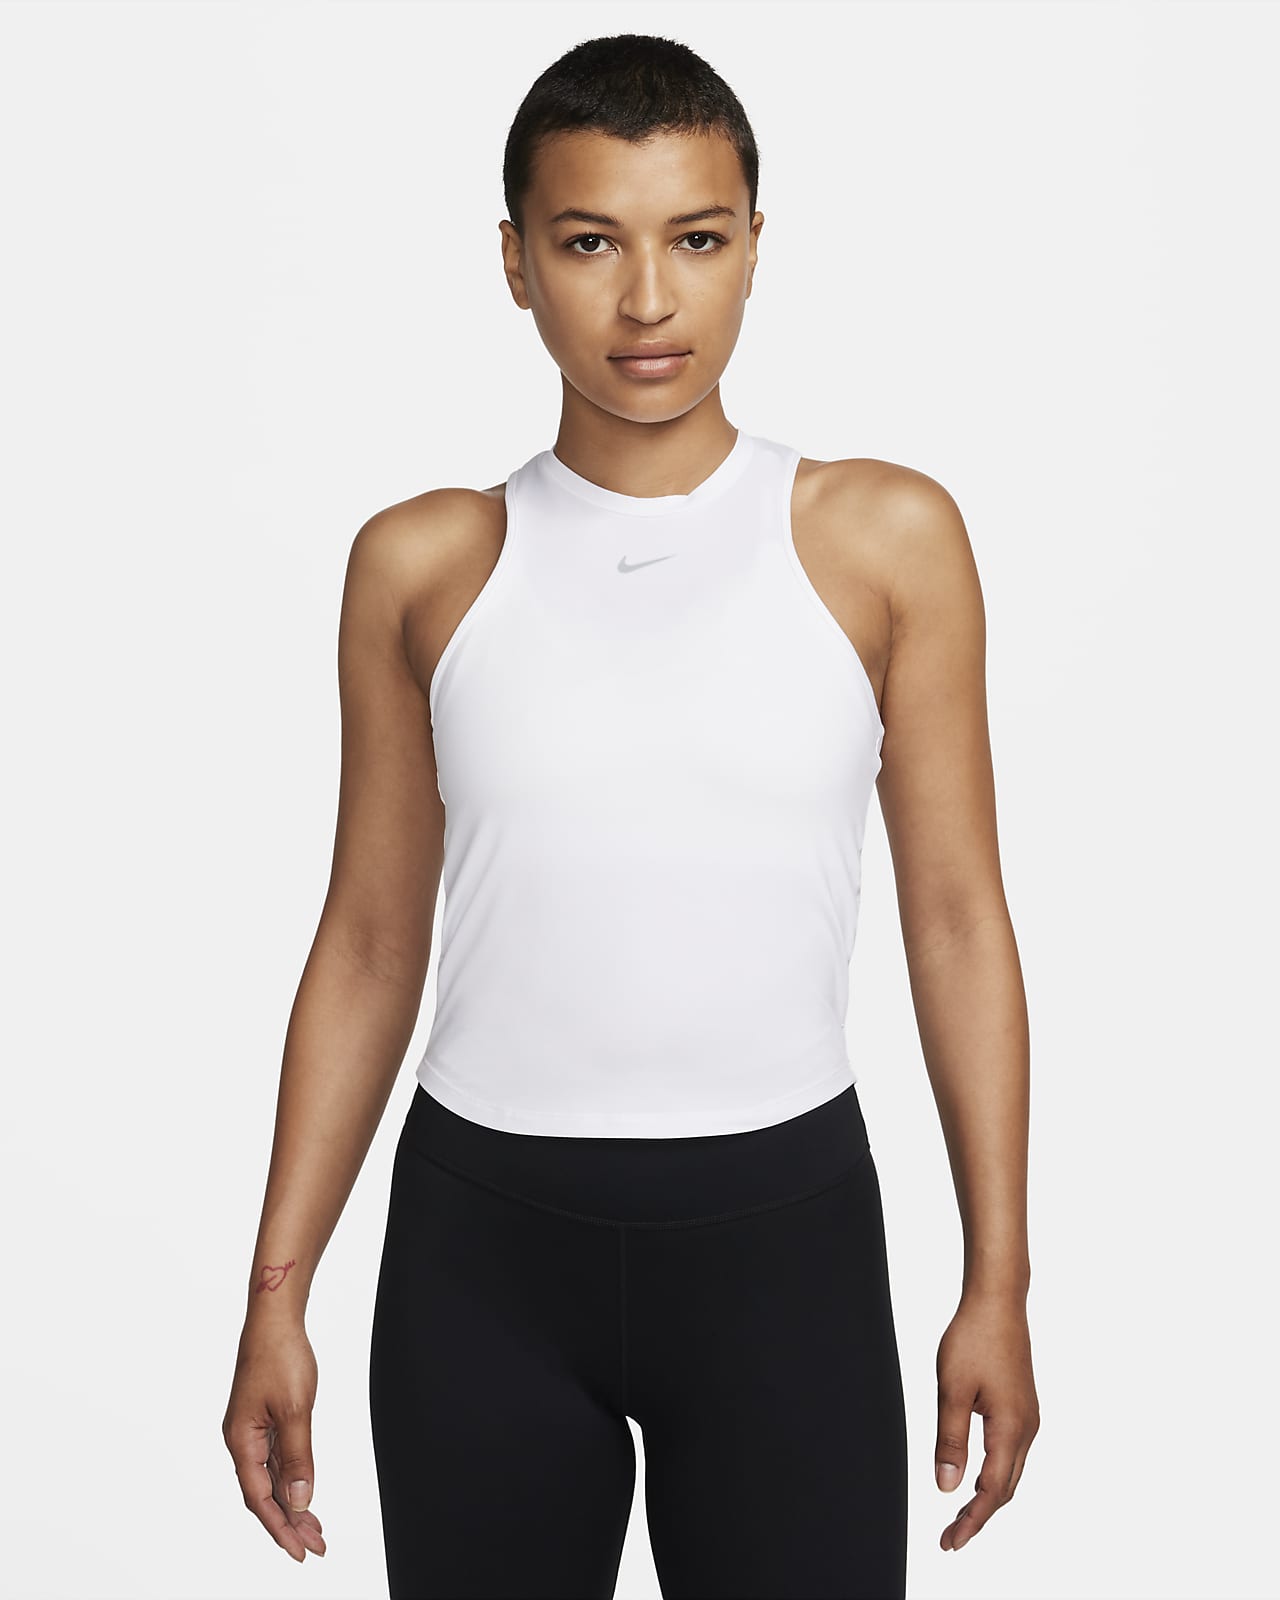 Nike Womens One Slim Tank Top - Black